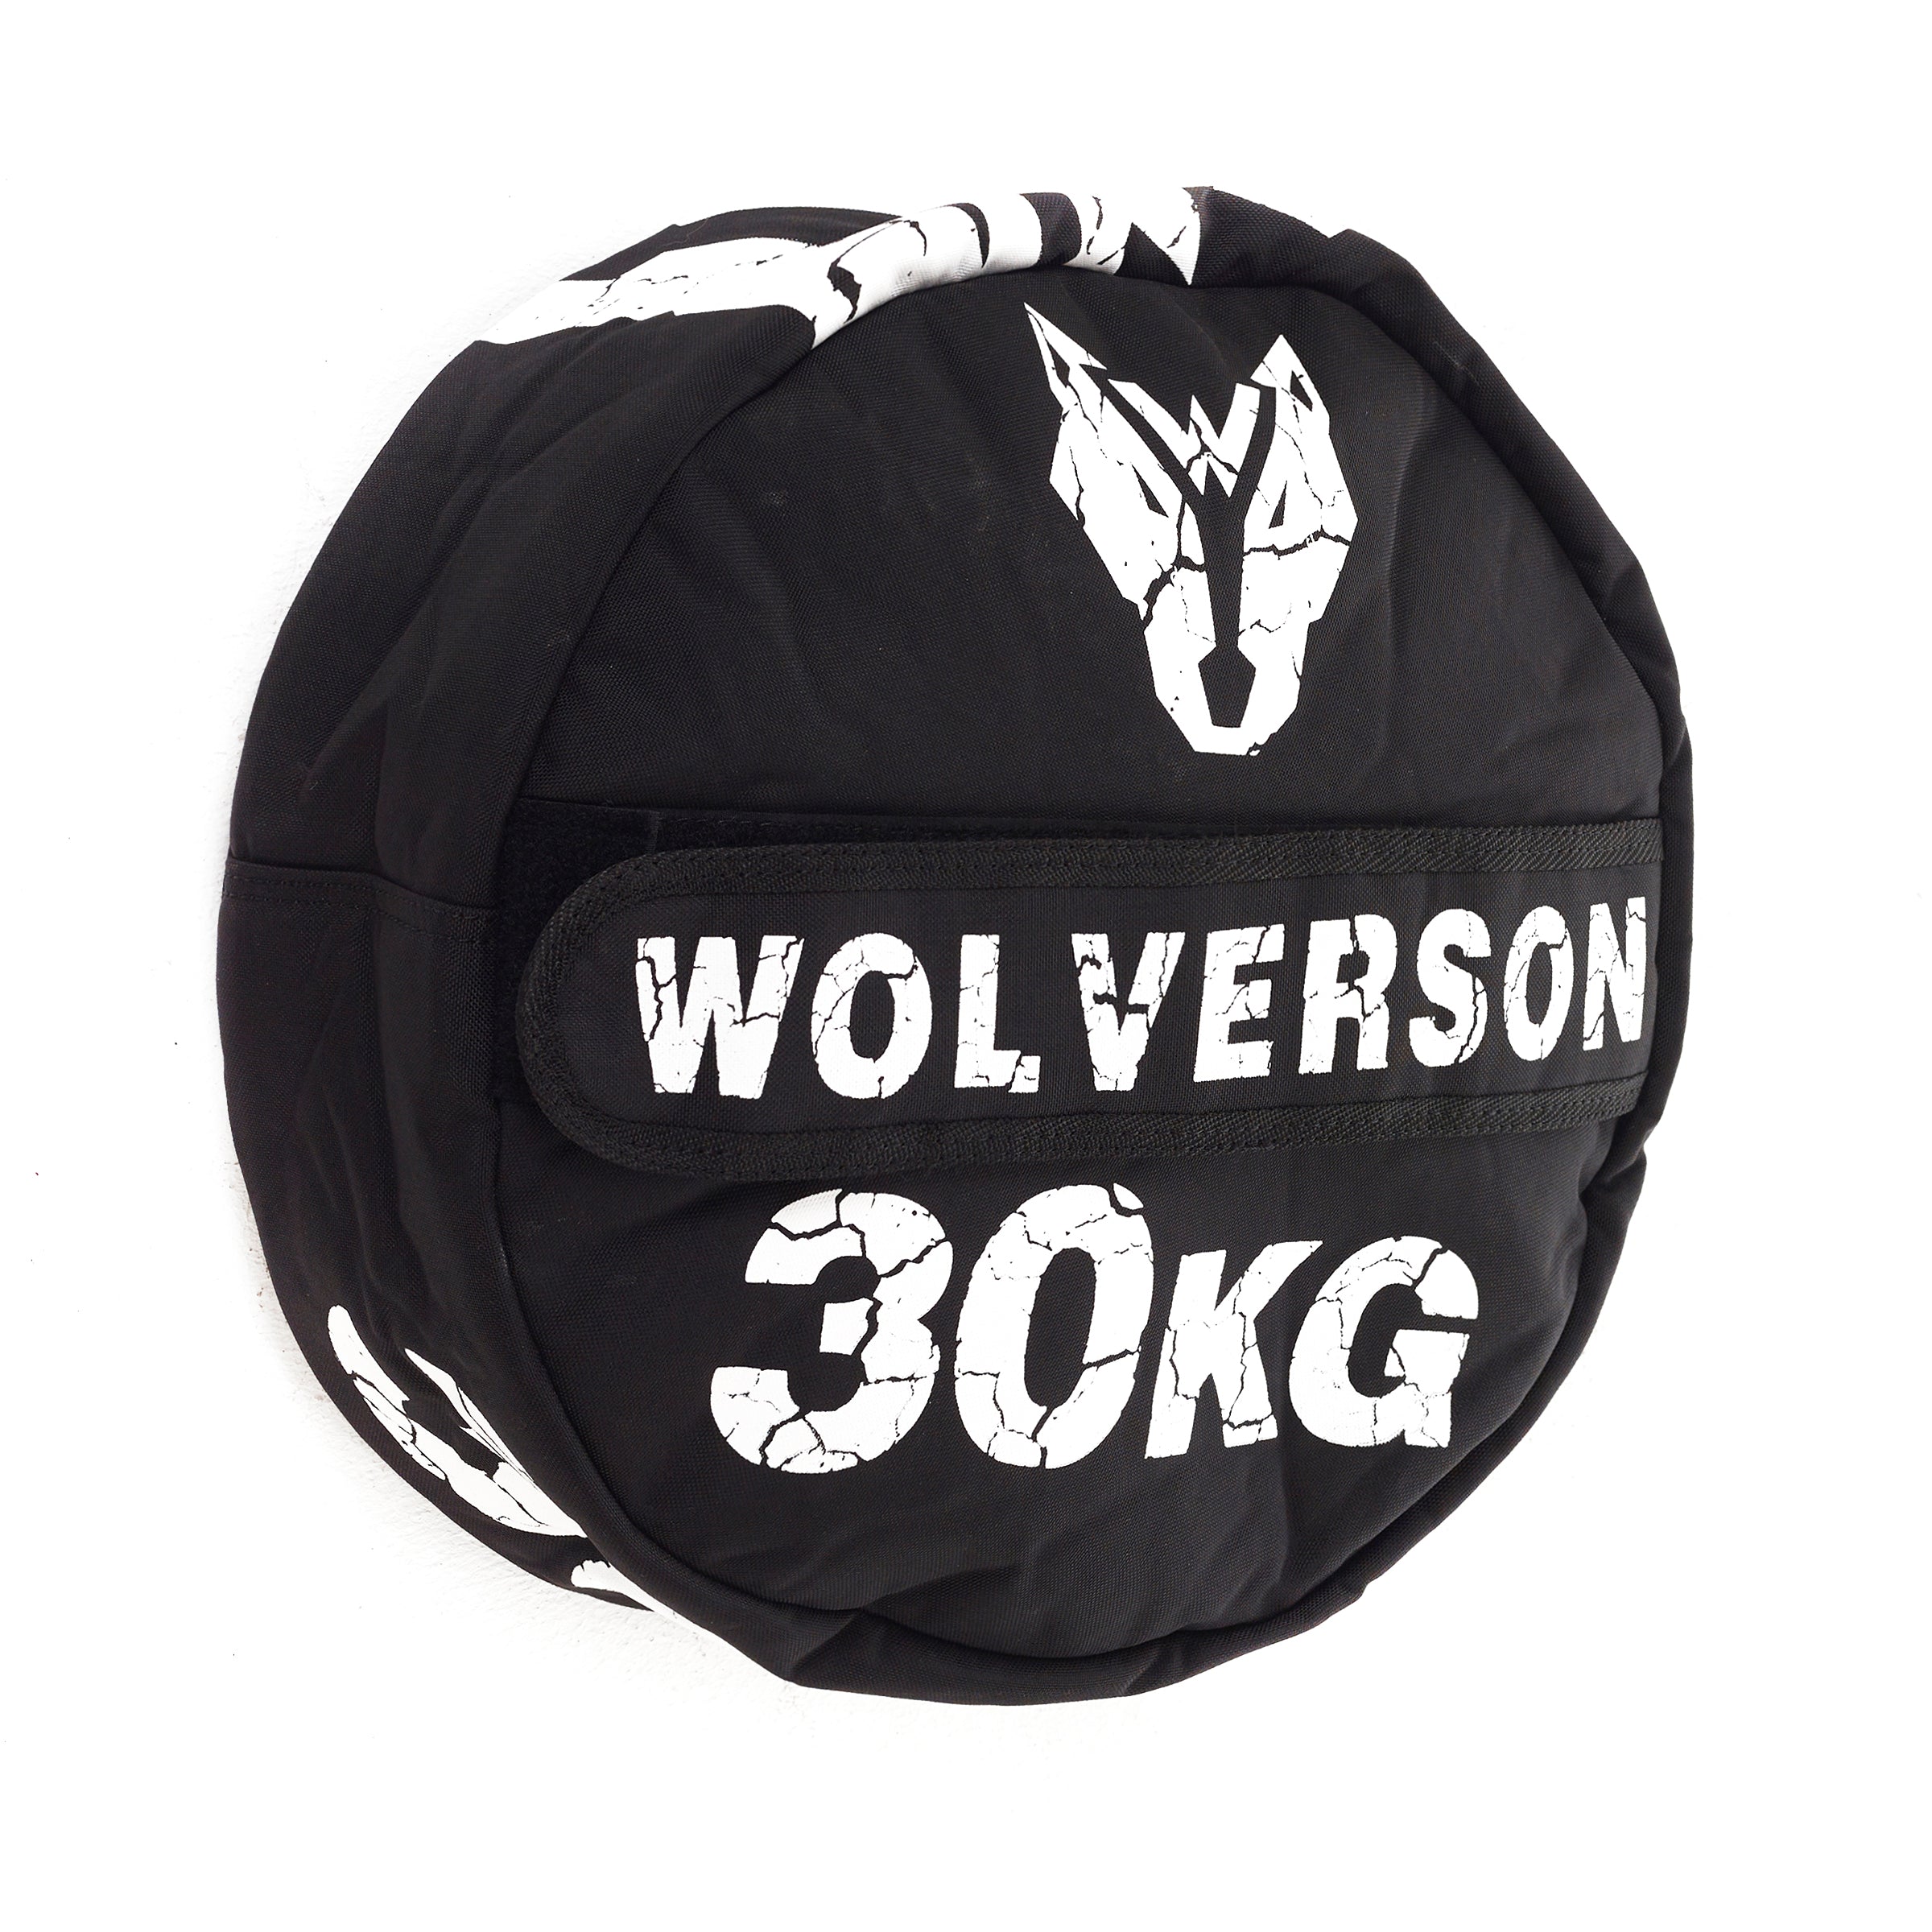 Wolverson Strongman Sandbags - Wolverson Fitness